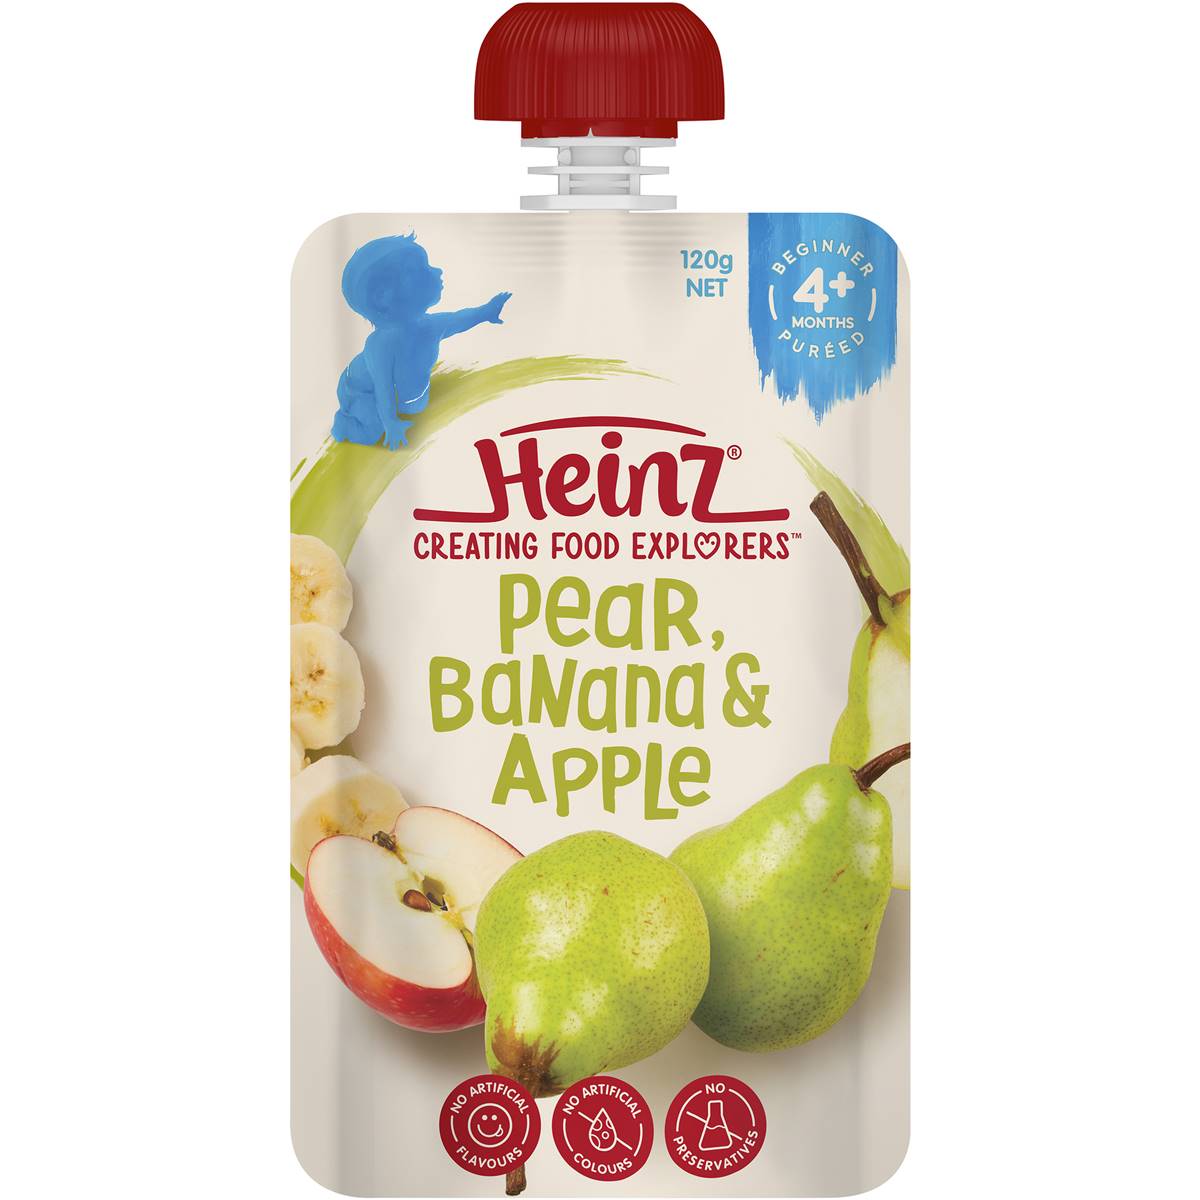 Heinz Simply Apple Peach & Mango 120g Banana Custard - DoctorOnCall Farmasi Online